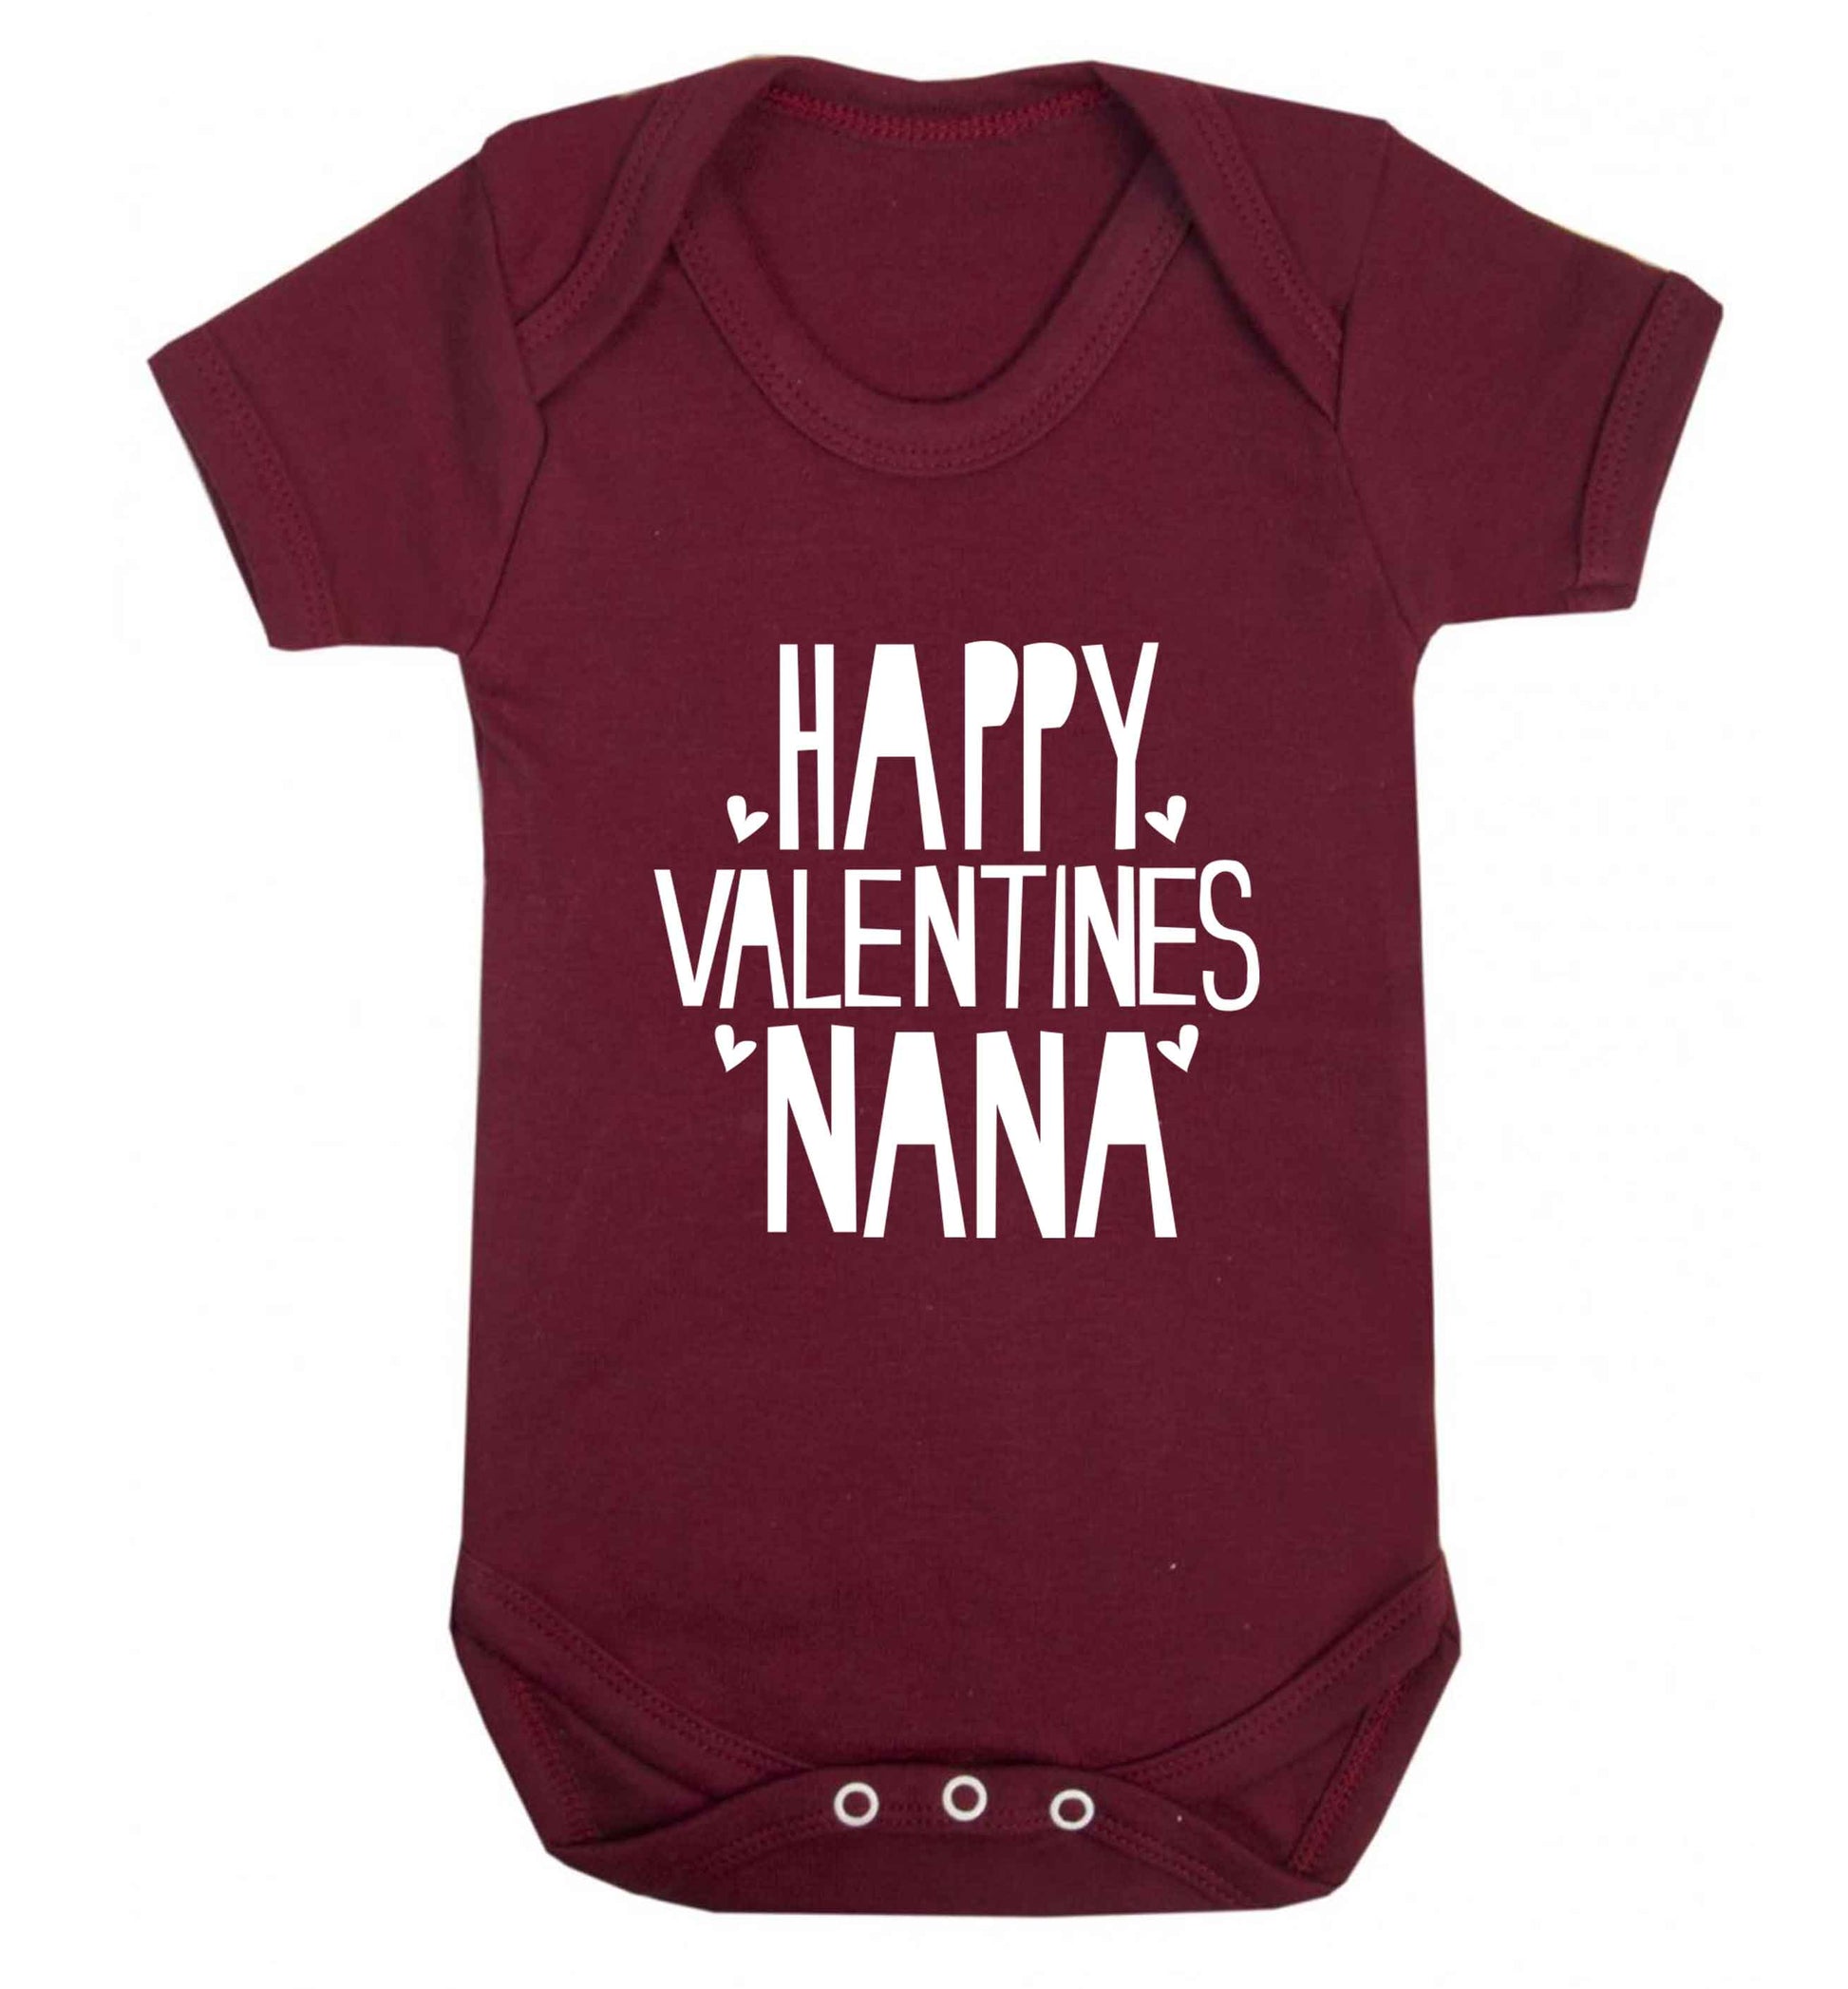 Happy valentines nana baby vest maroon 18-24 months